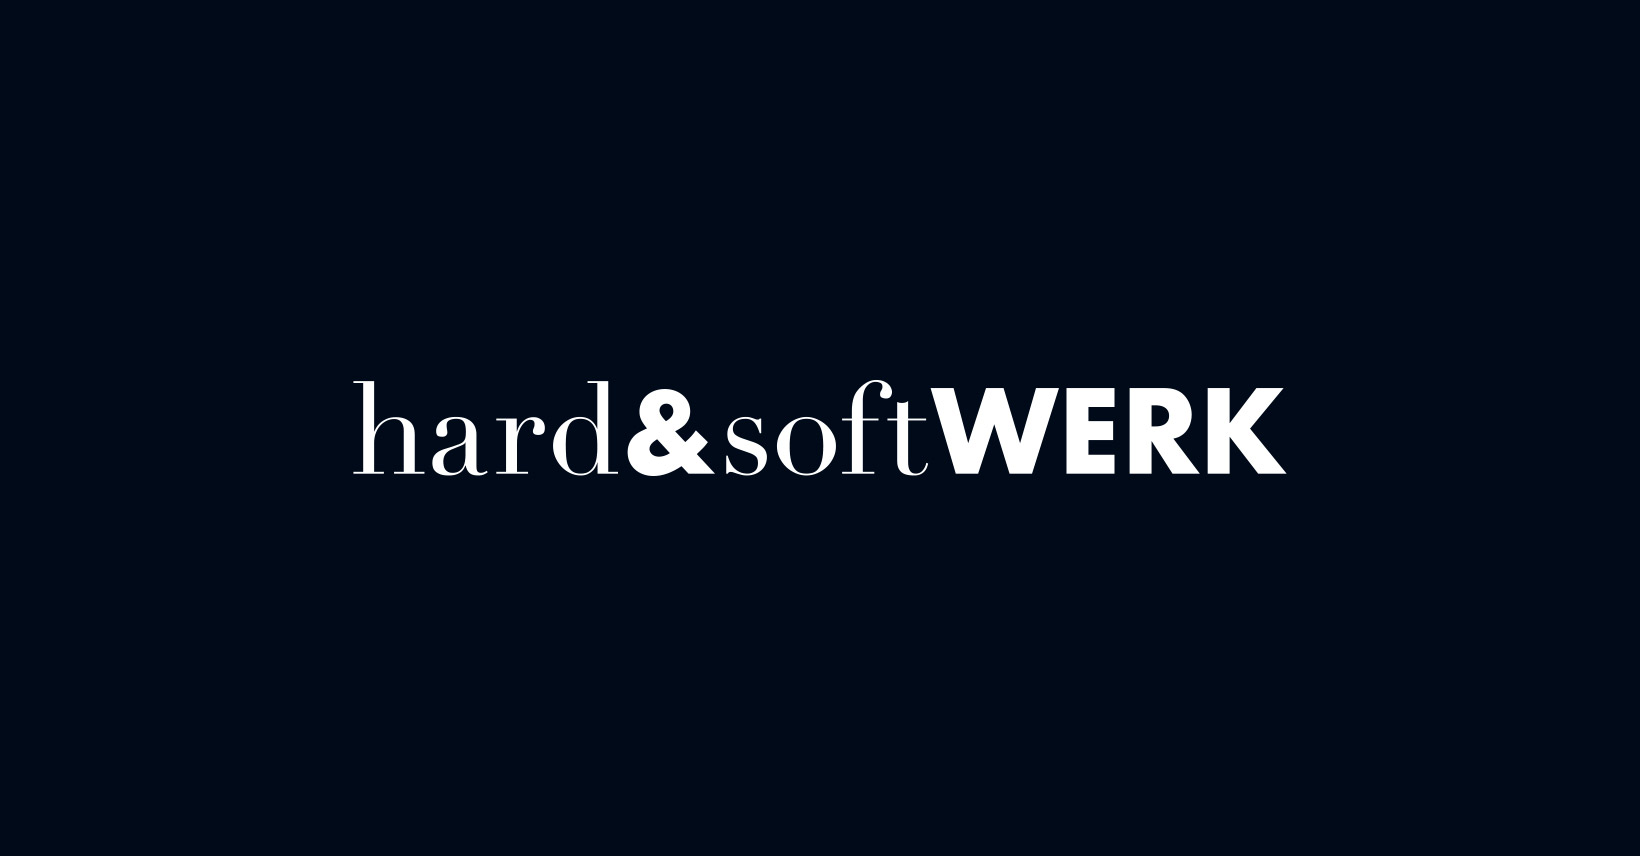 (c) Hard-softwerk.com